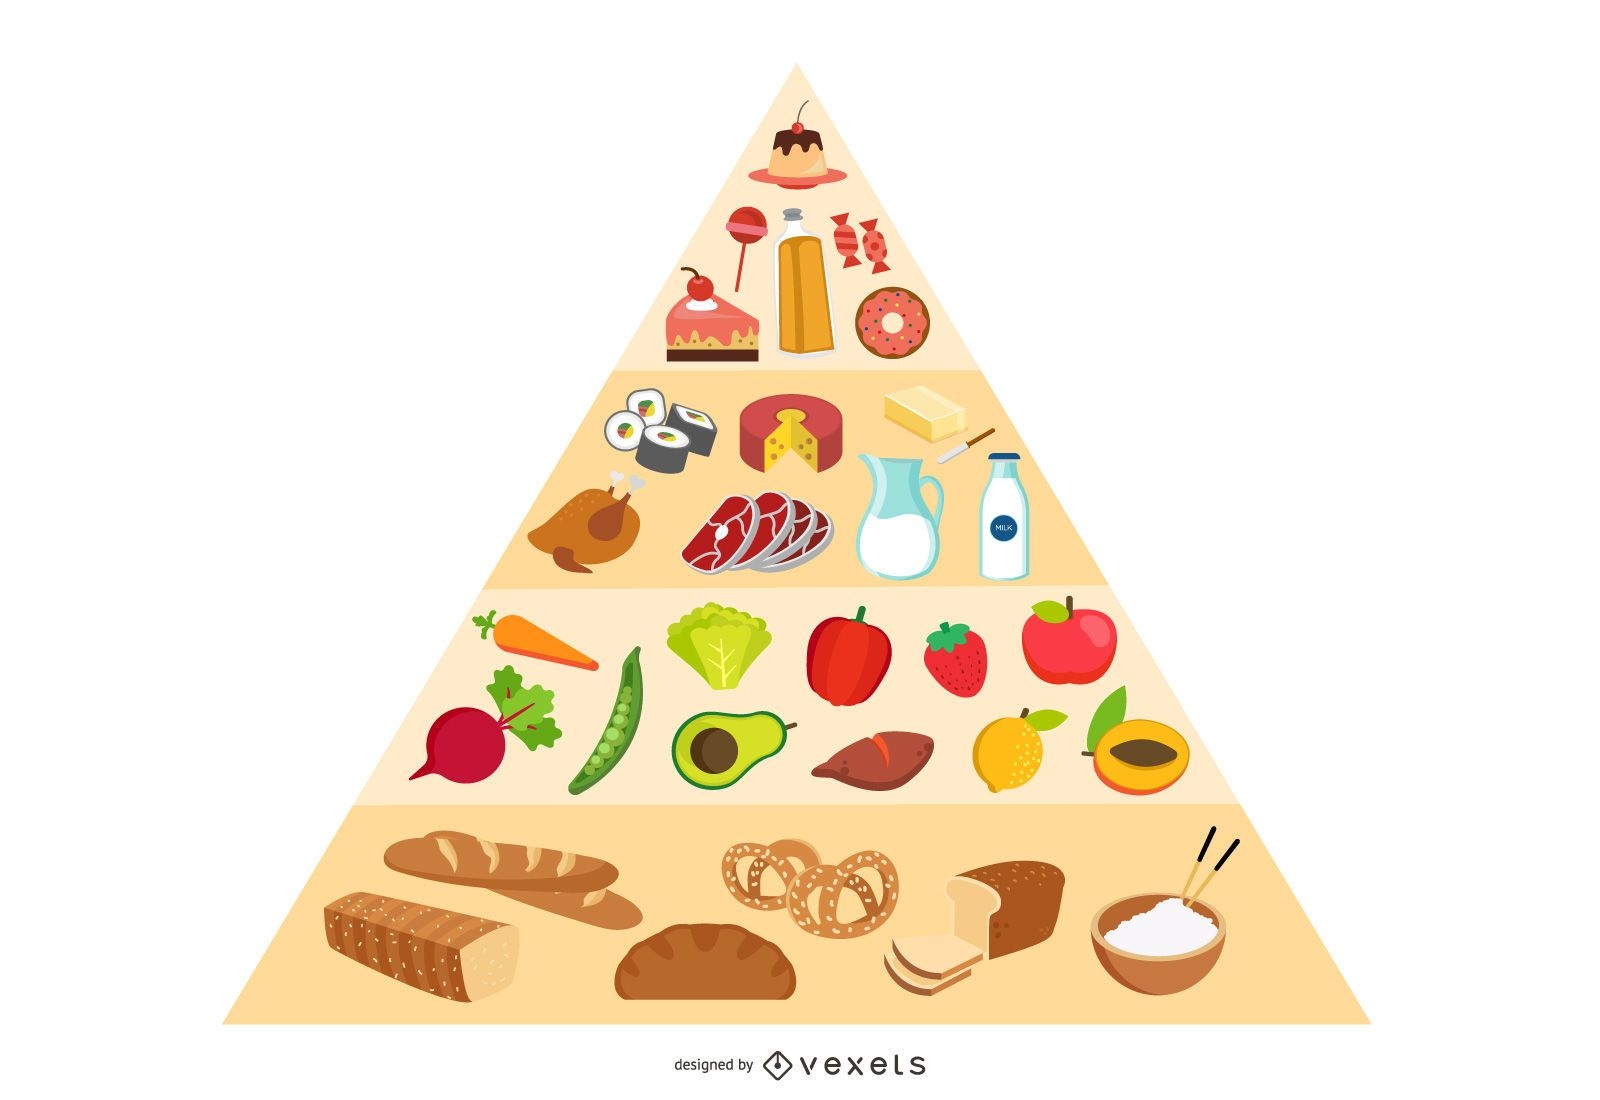 3 Nahrungsmittelpyramide-Vektor